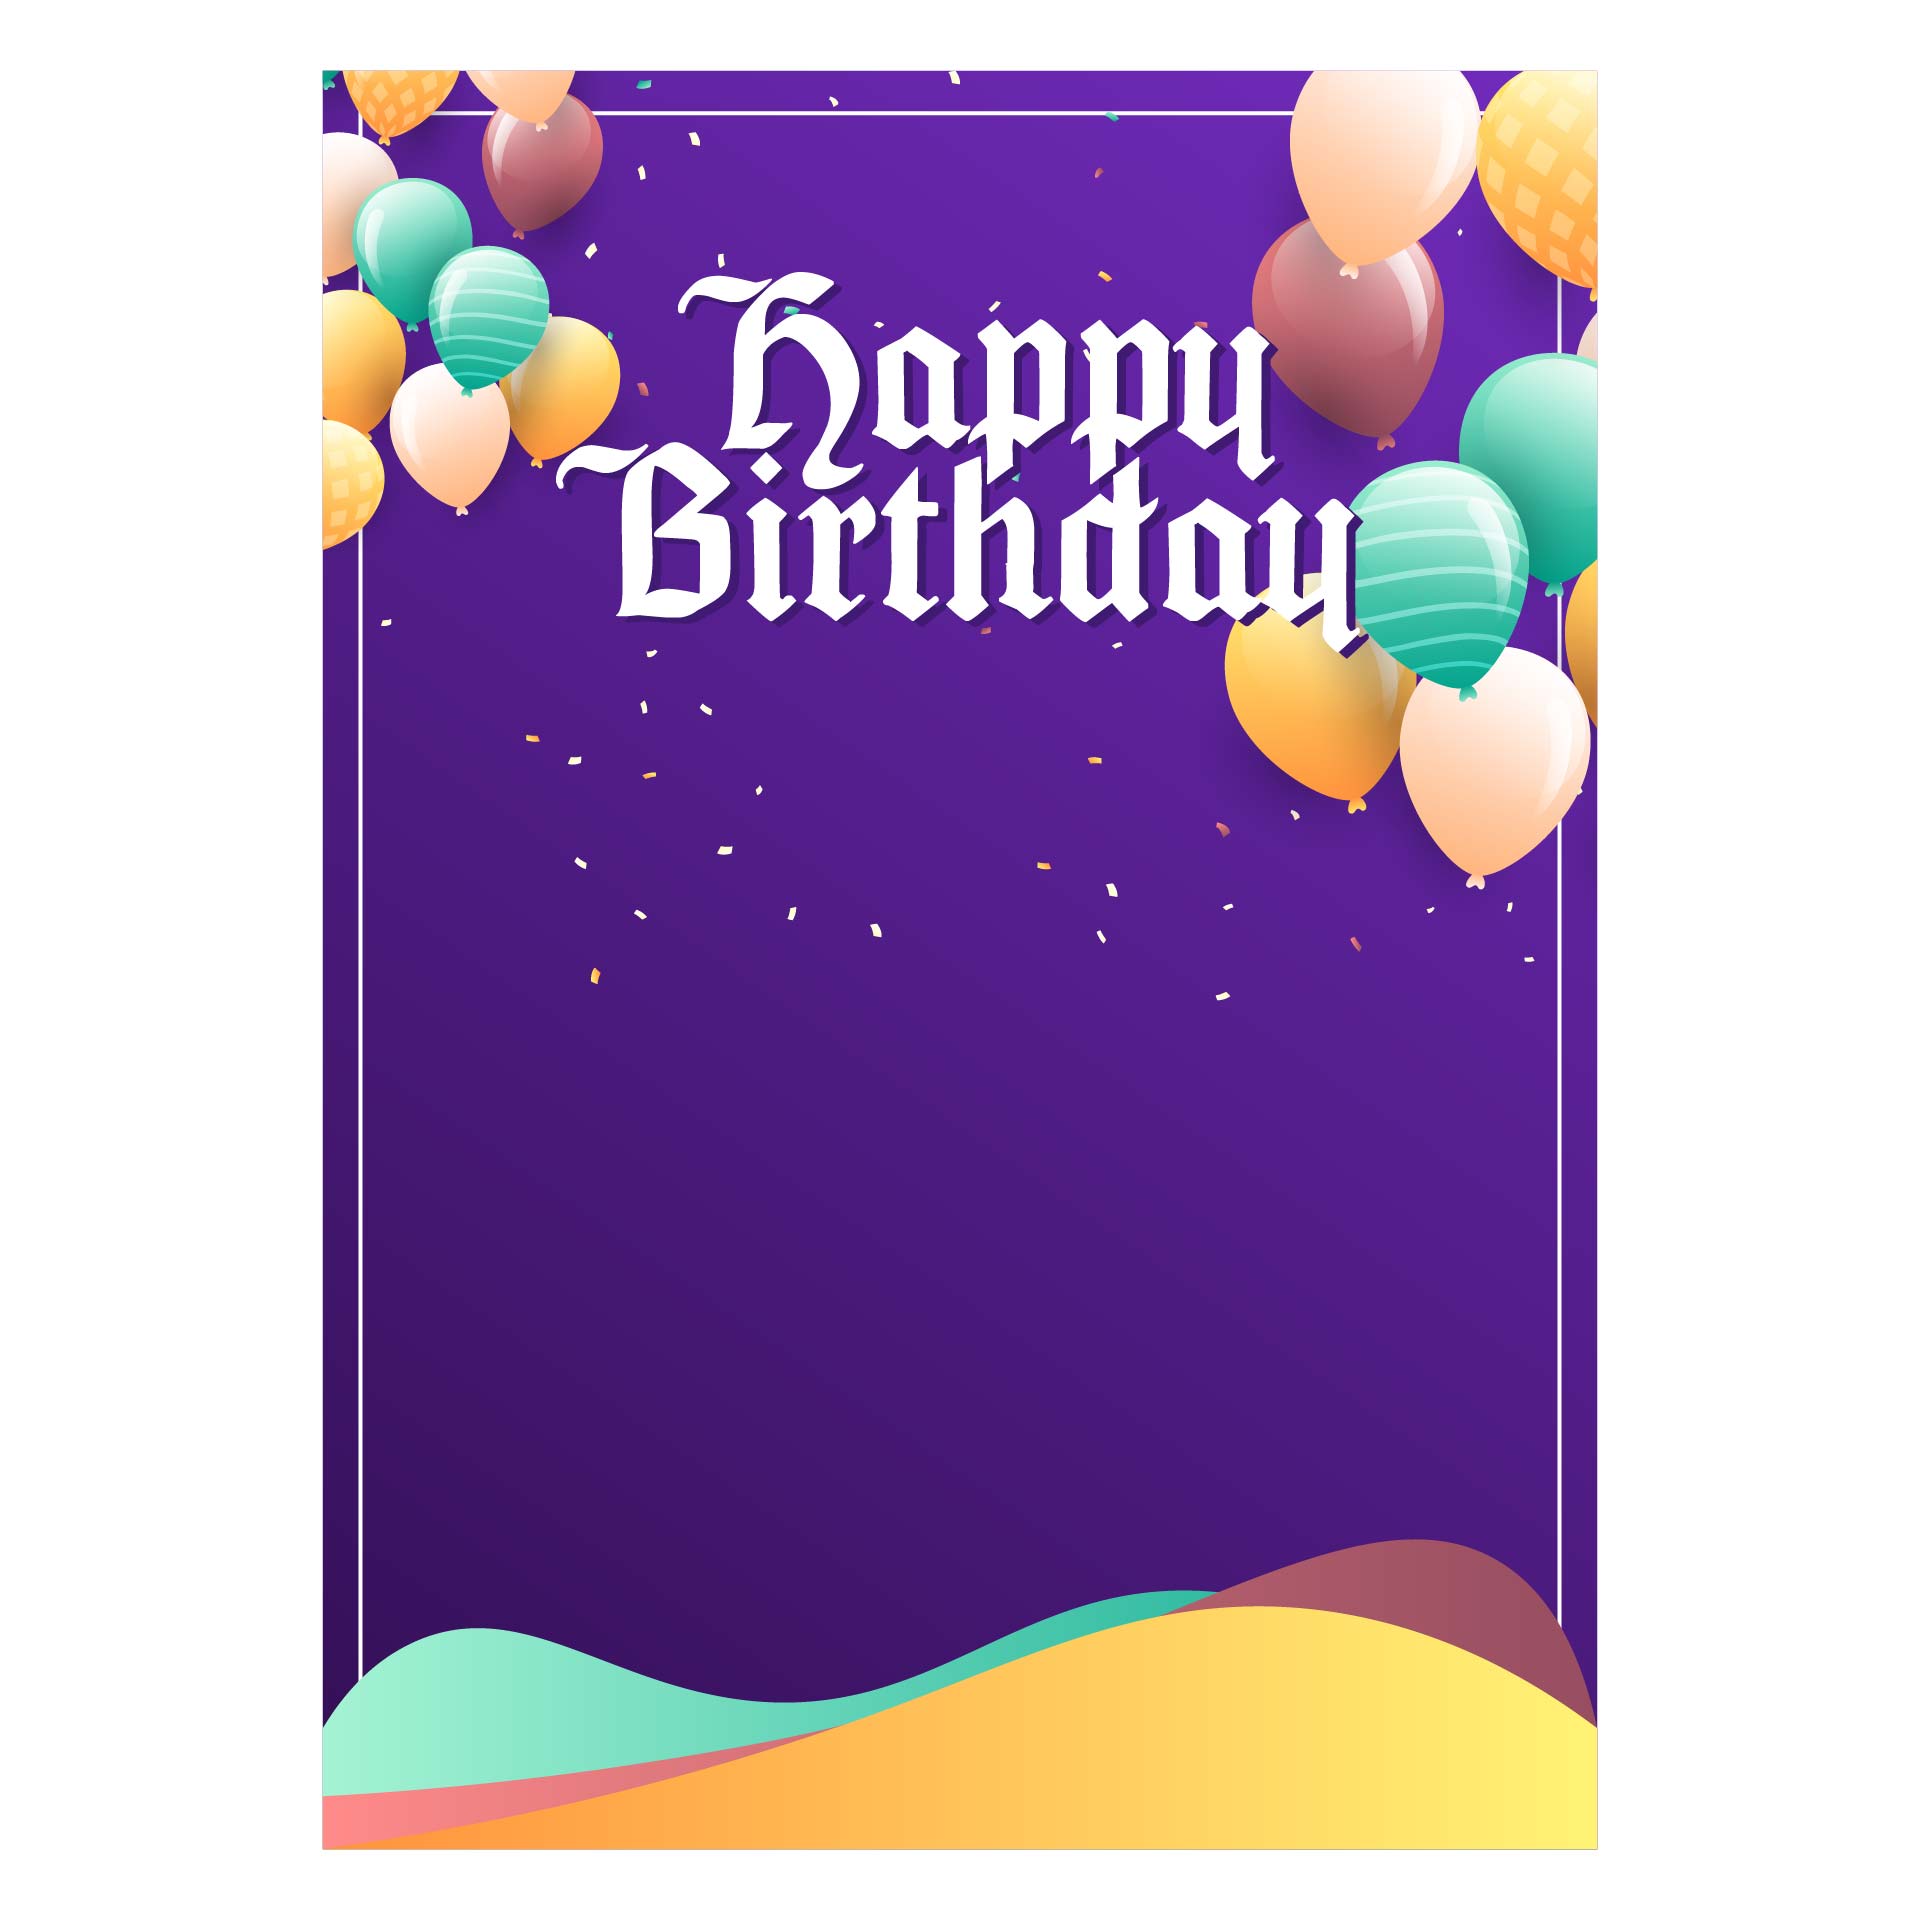 Printable Birthday Cards For Everyone